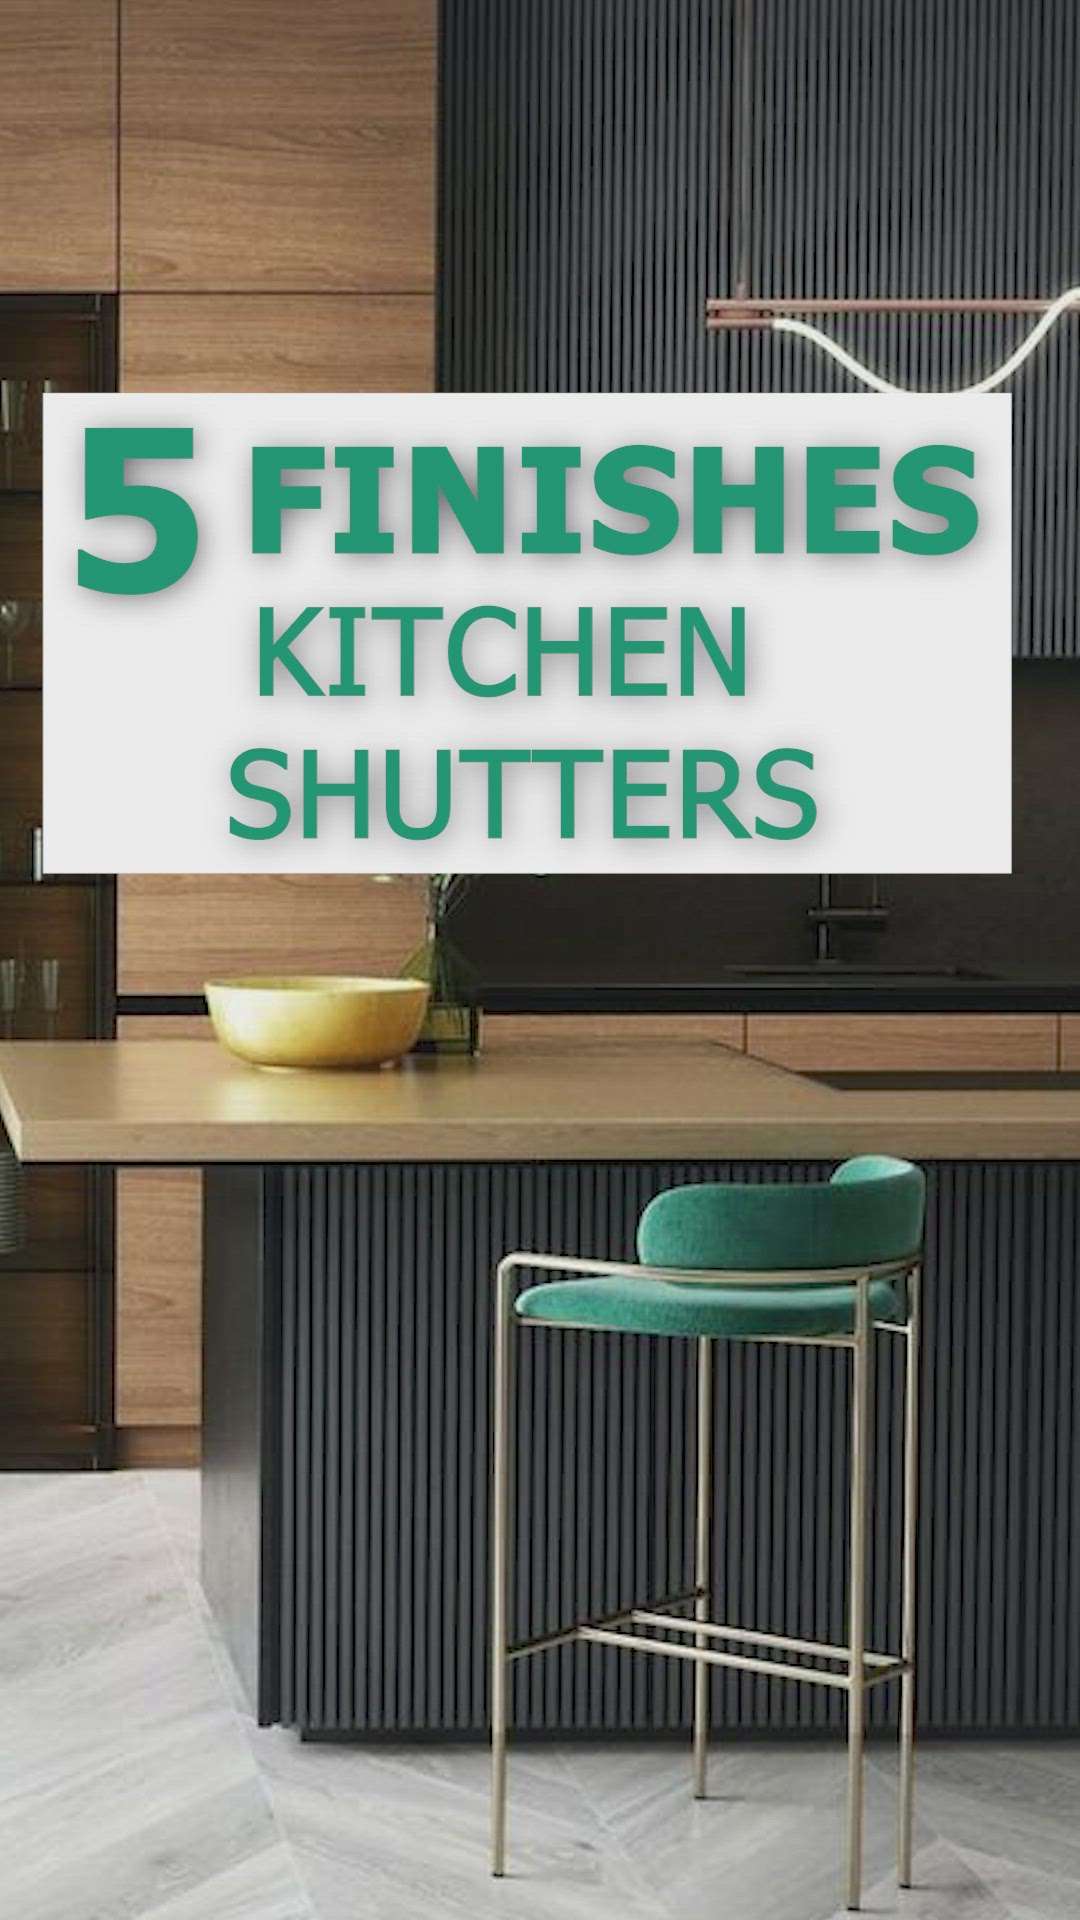 kitchen finishes #KitchenIdeas  #KitchenCabinet  #kitchencabinetmaterials  #ModularKitchen  #Architectural&Interior  #Architect